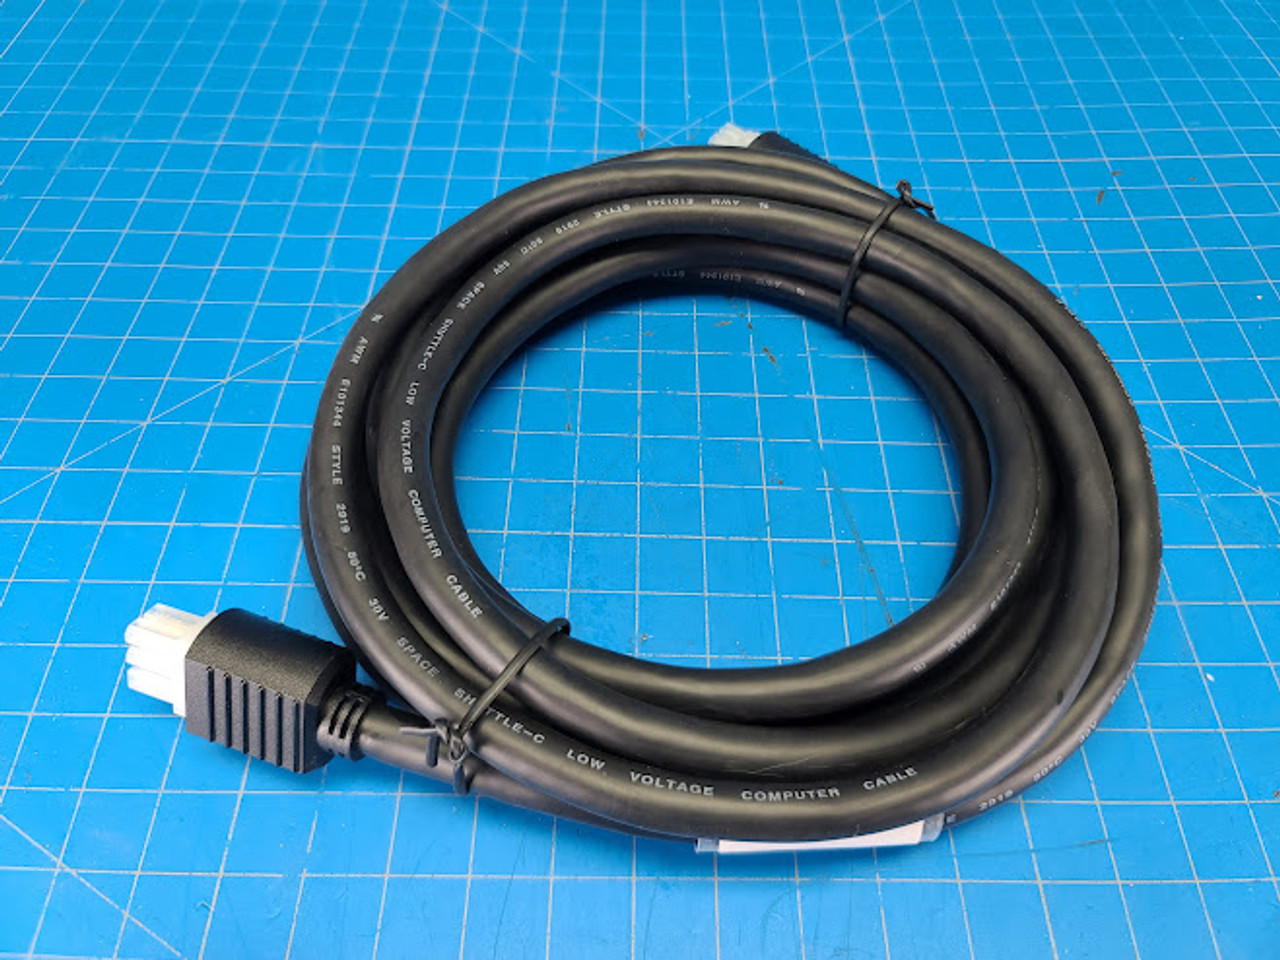 Dematic Shelf Cable 120" Black F0032-01108AC